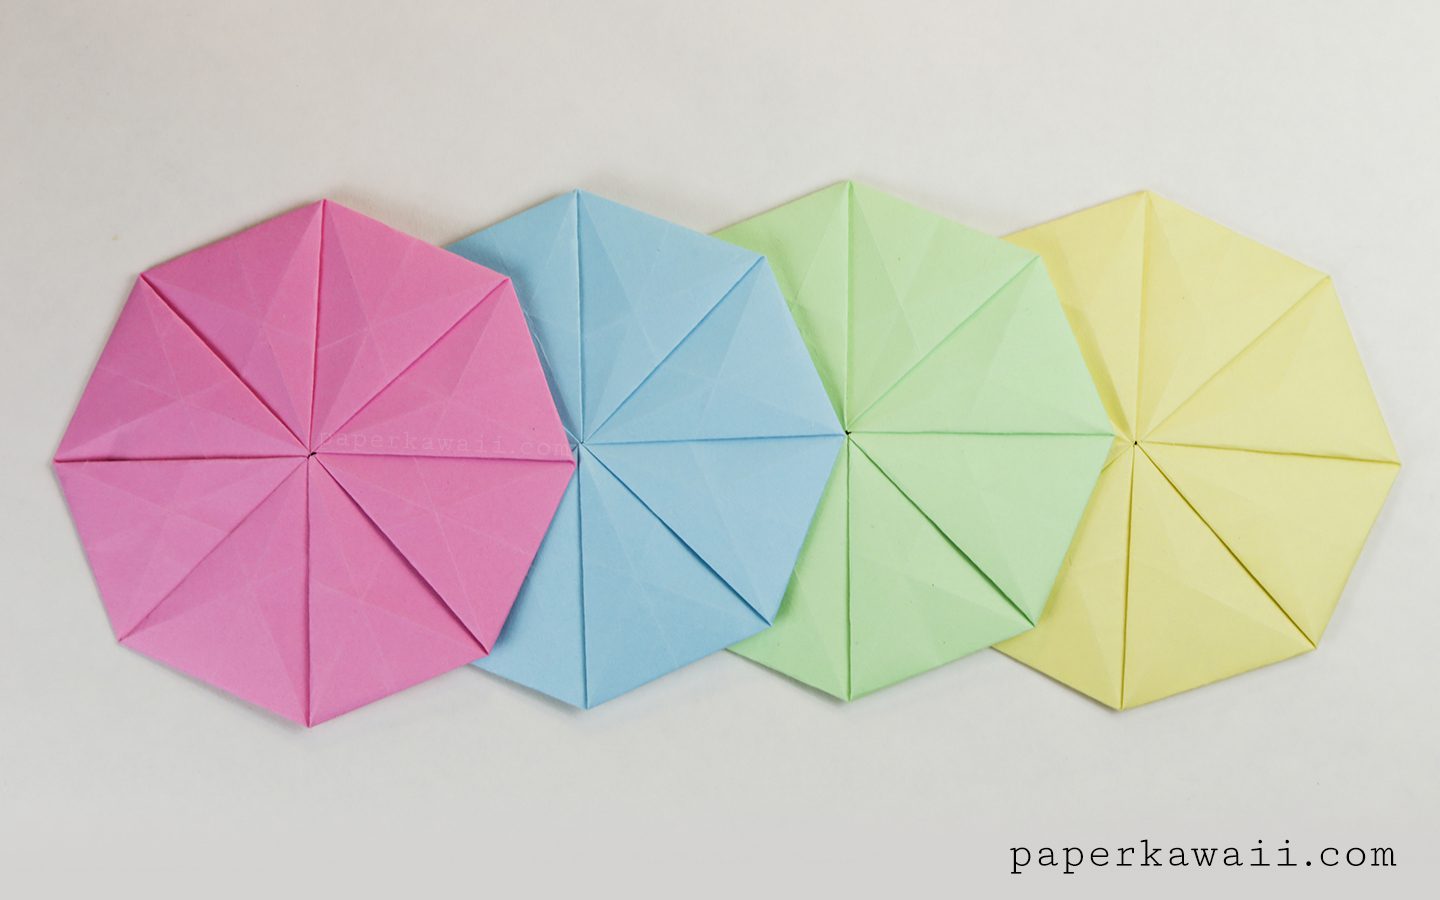 Use an Origami Octagonal Tato as a Coaster!